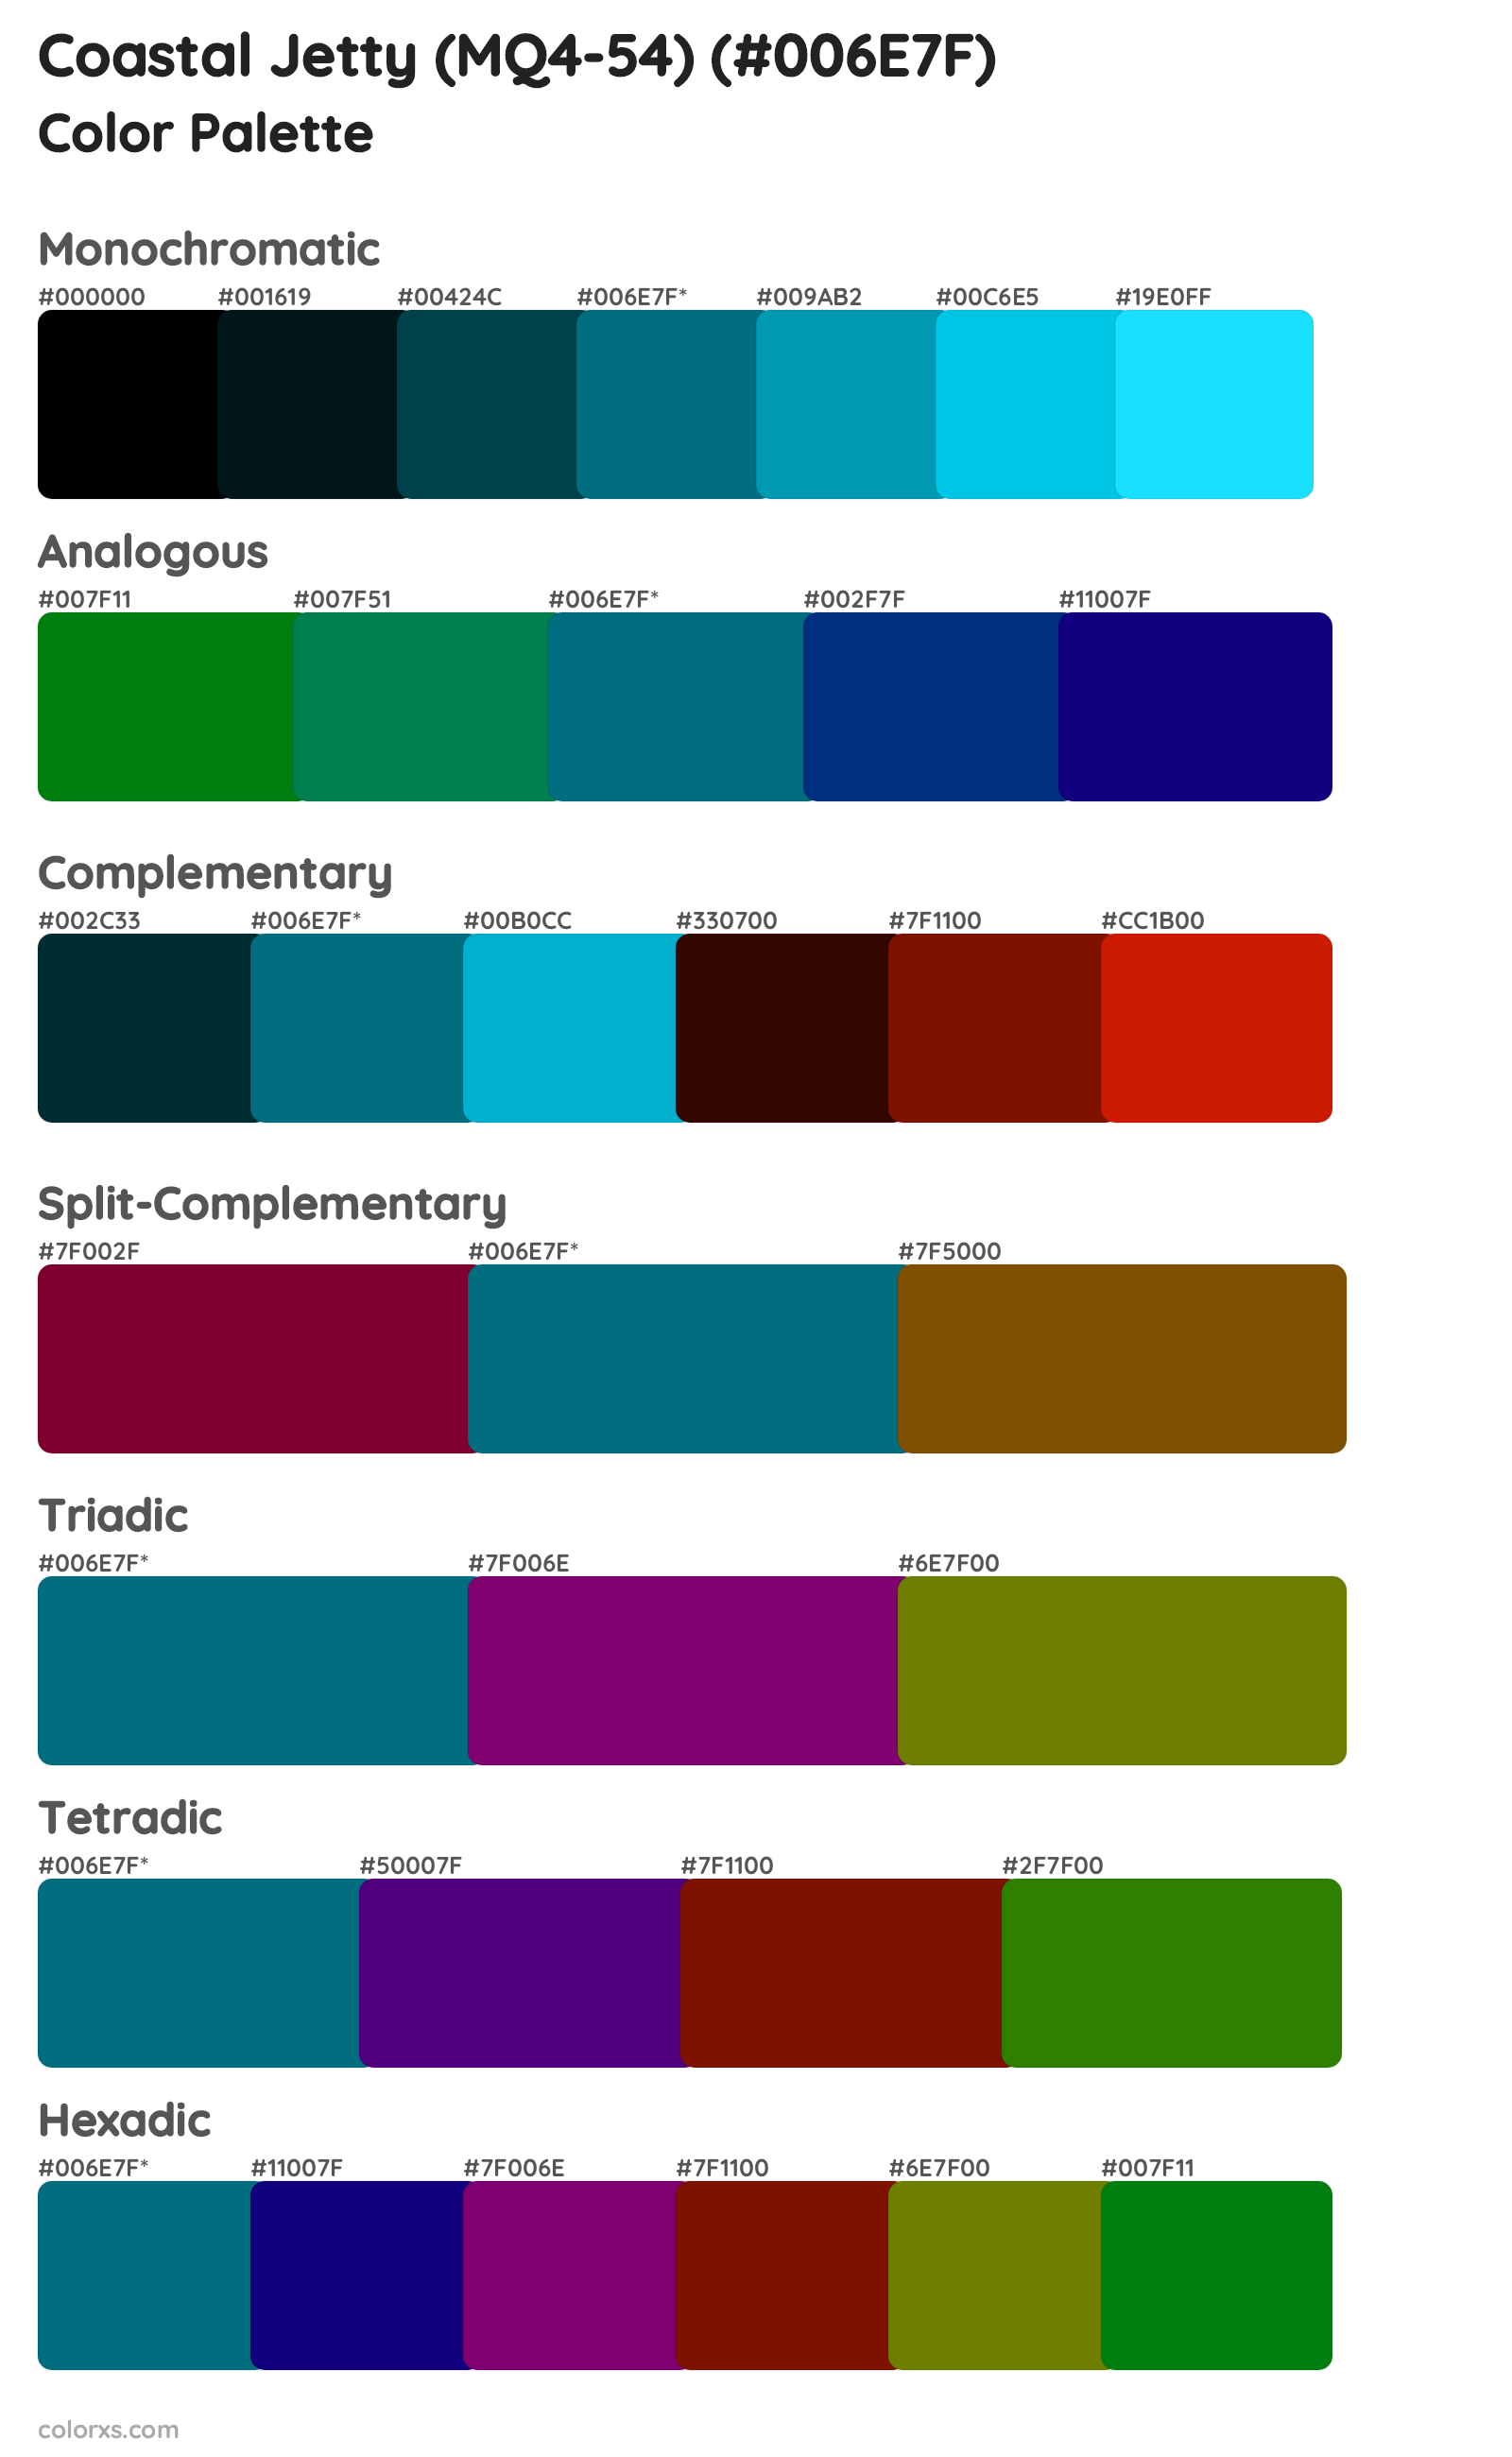 Coastal Jetty (MQ4-54) Color Scheme Palettes